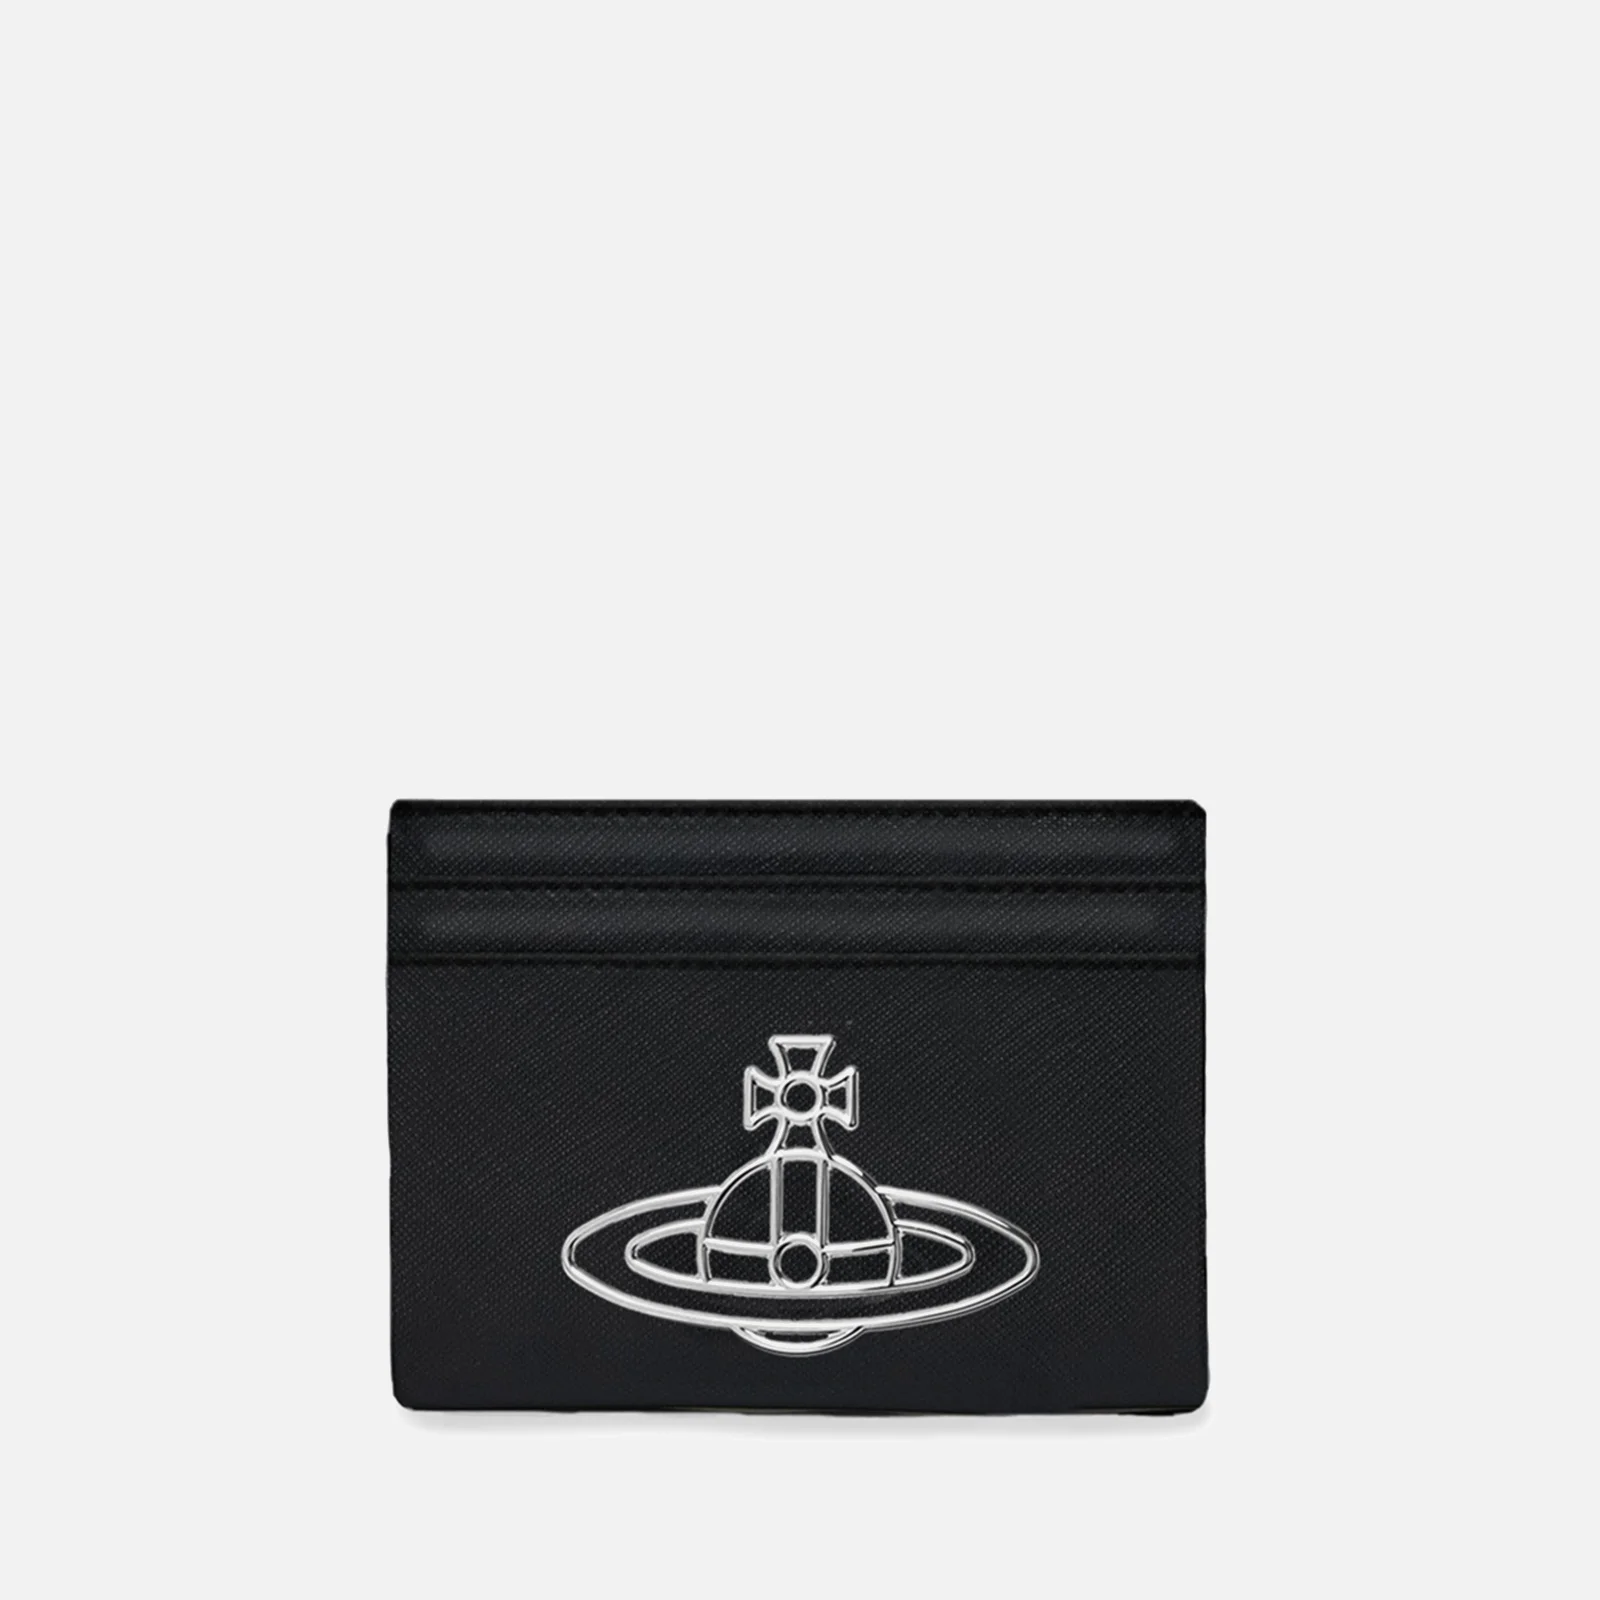 Vivienne Westwood Thin Line Orb Saffiano Leather Cardholder Image 1